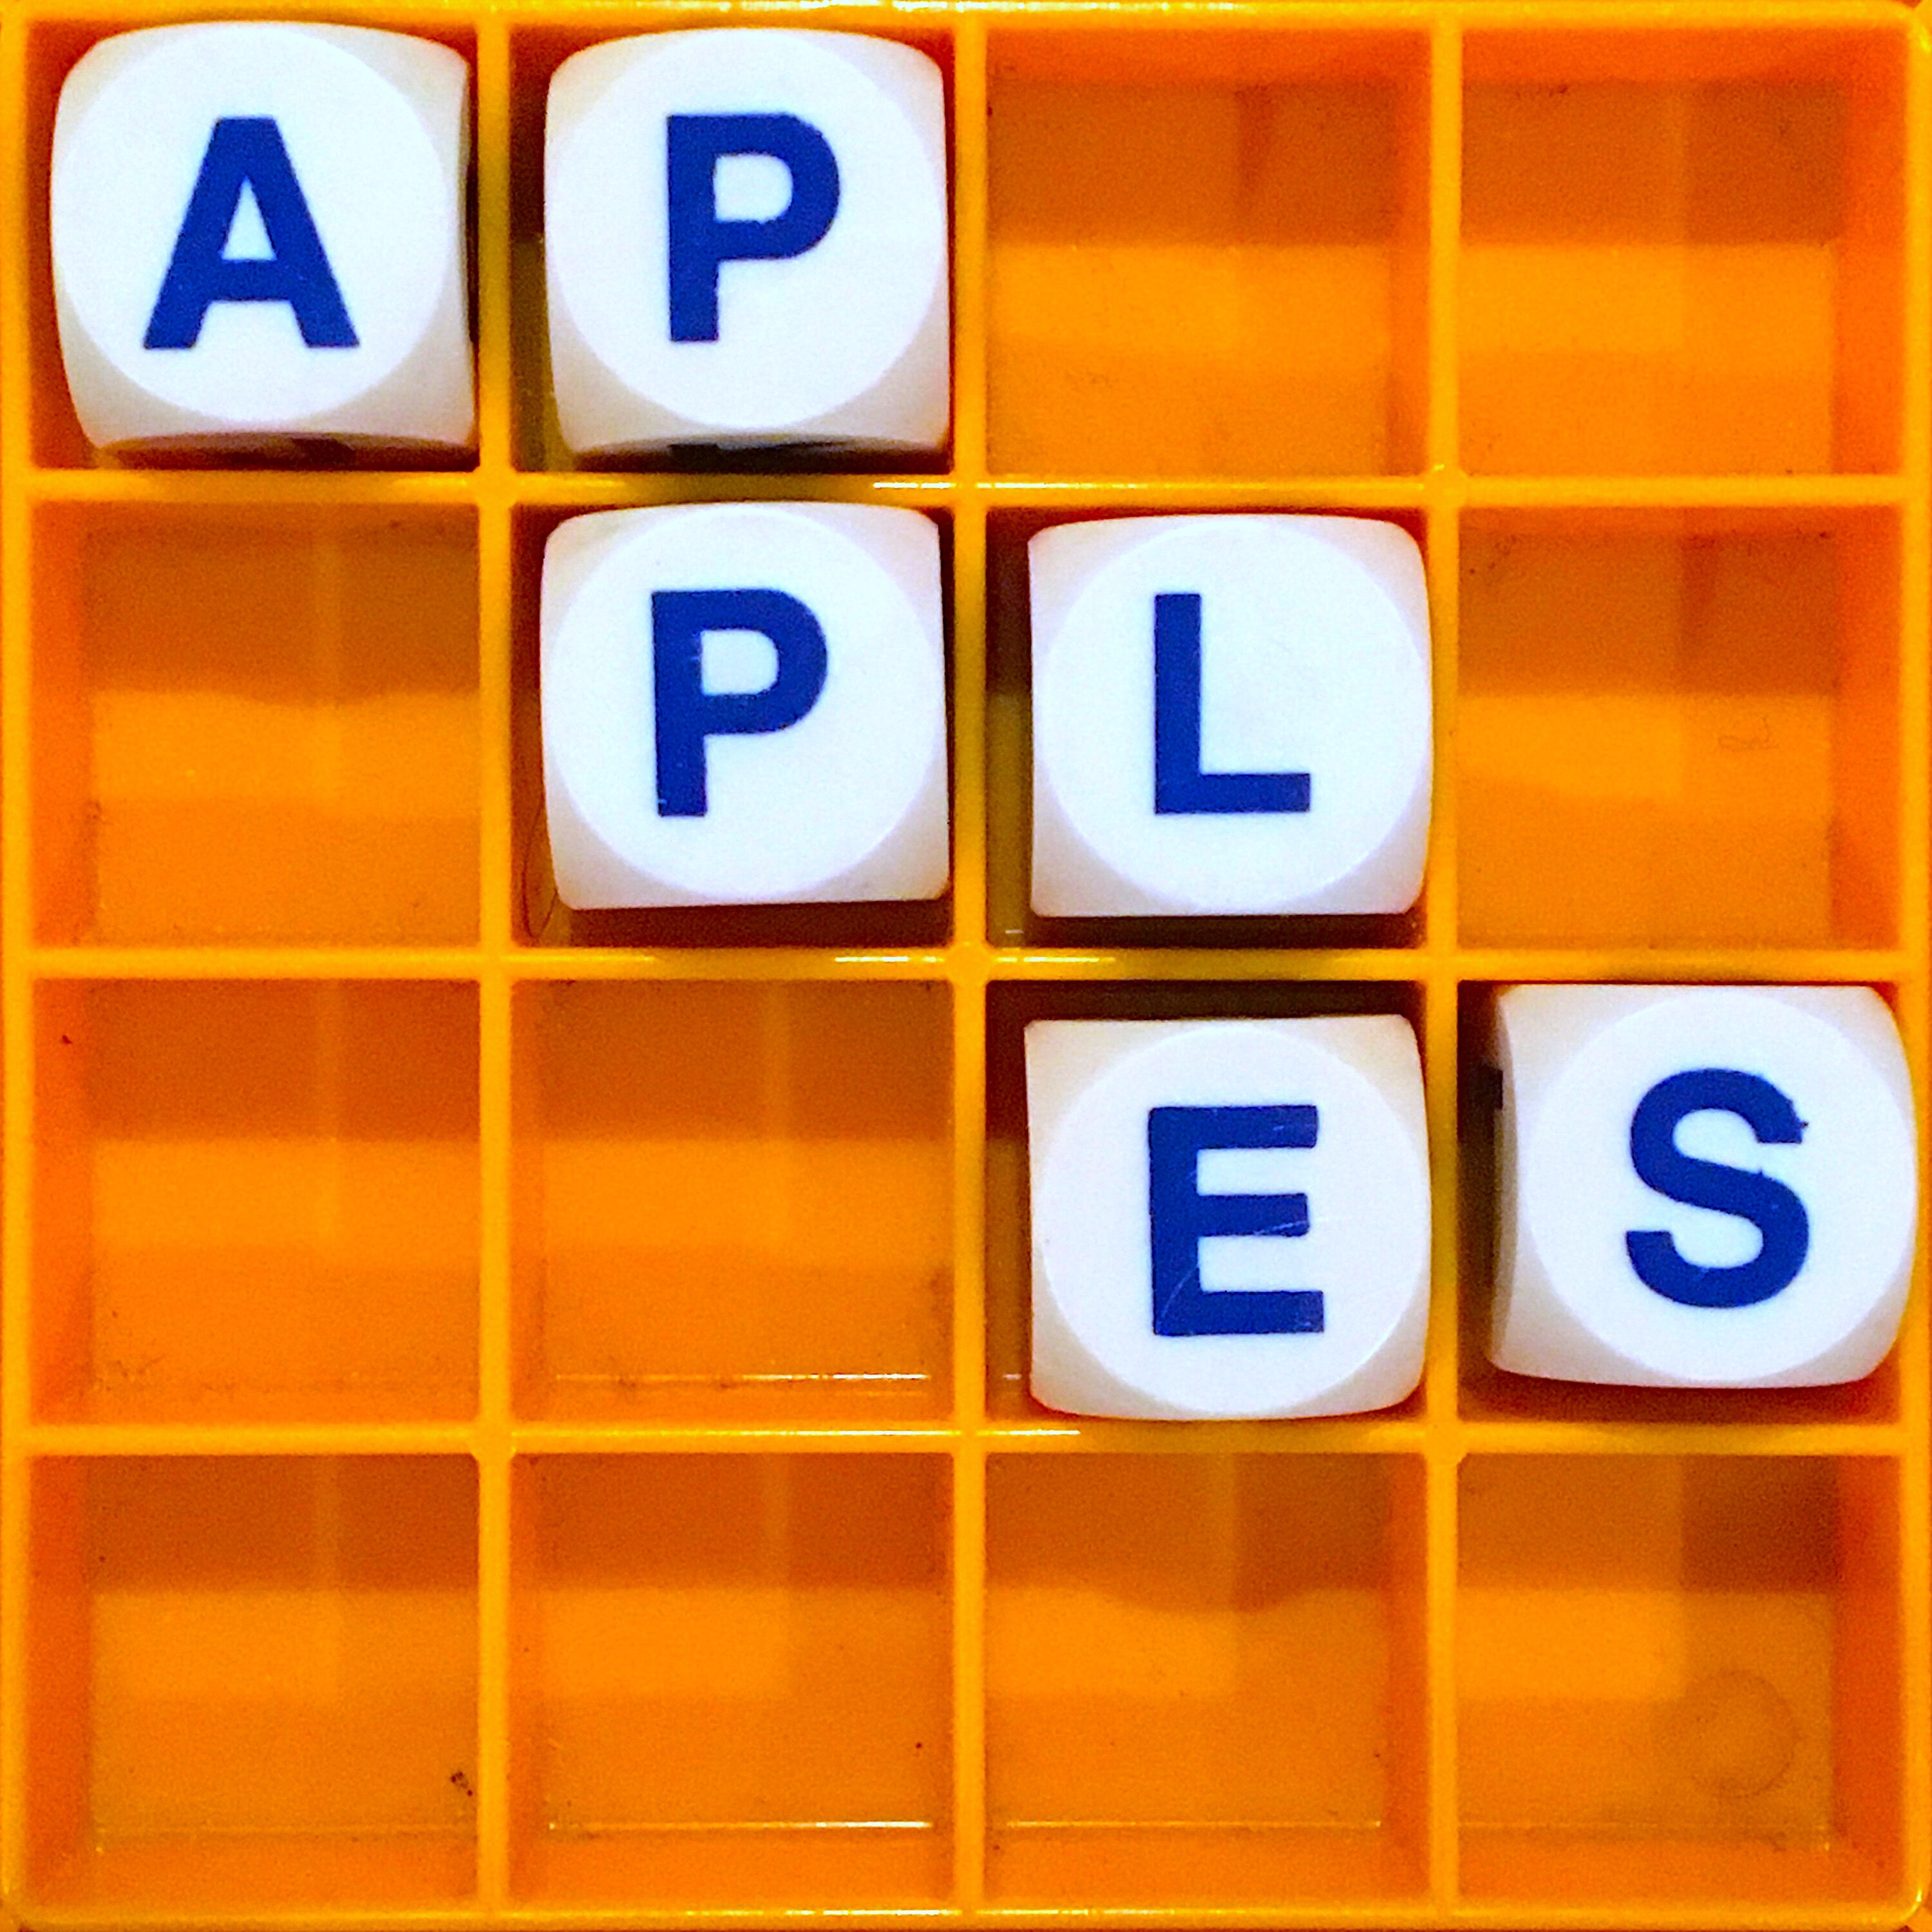 107. Apples